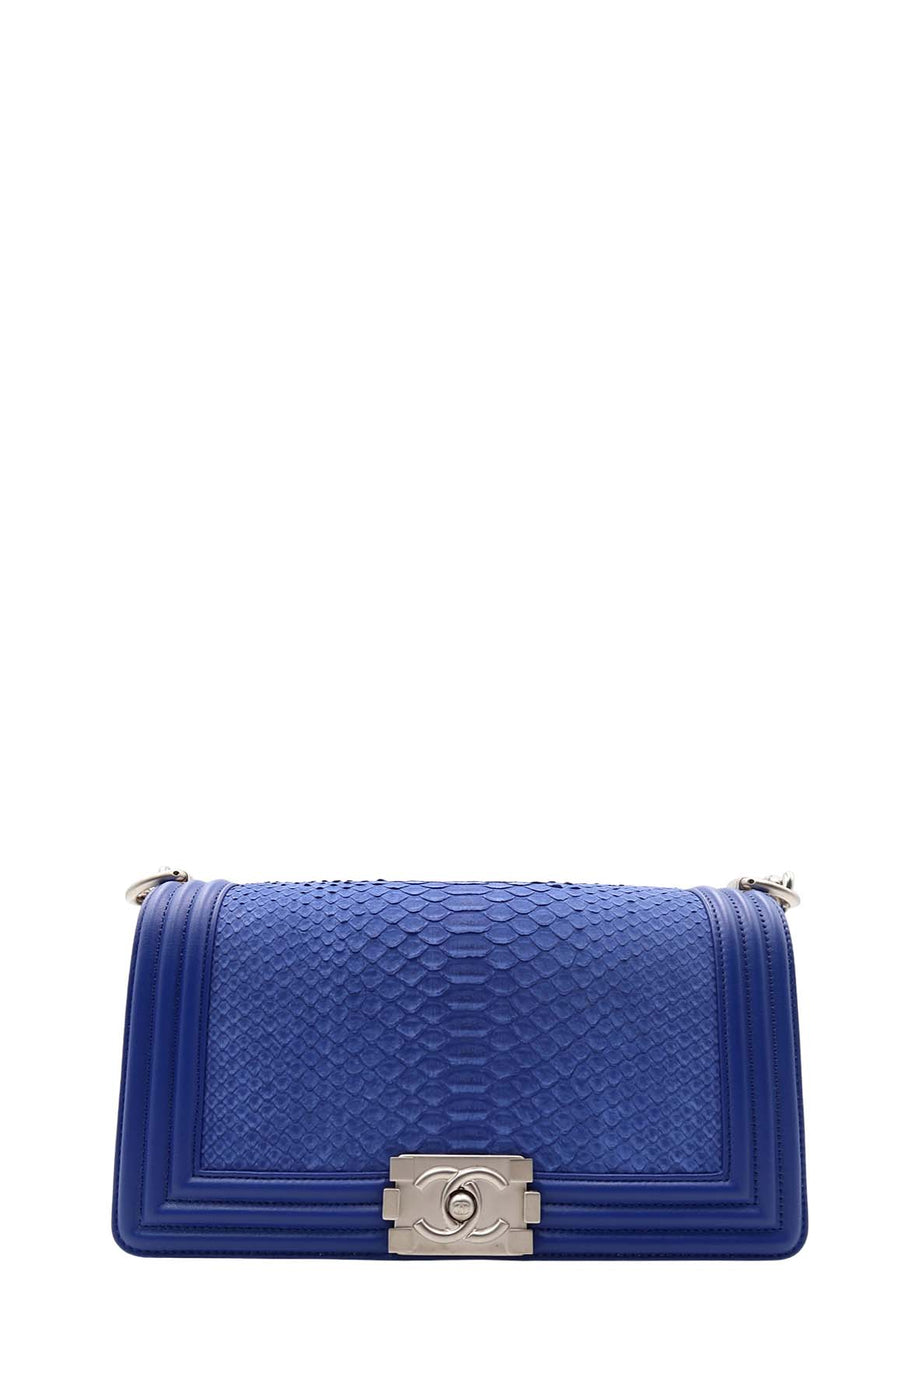 Replica Chanel Blue Python Boy Flap Bag in Matte Gold Hardware